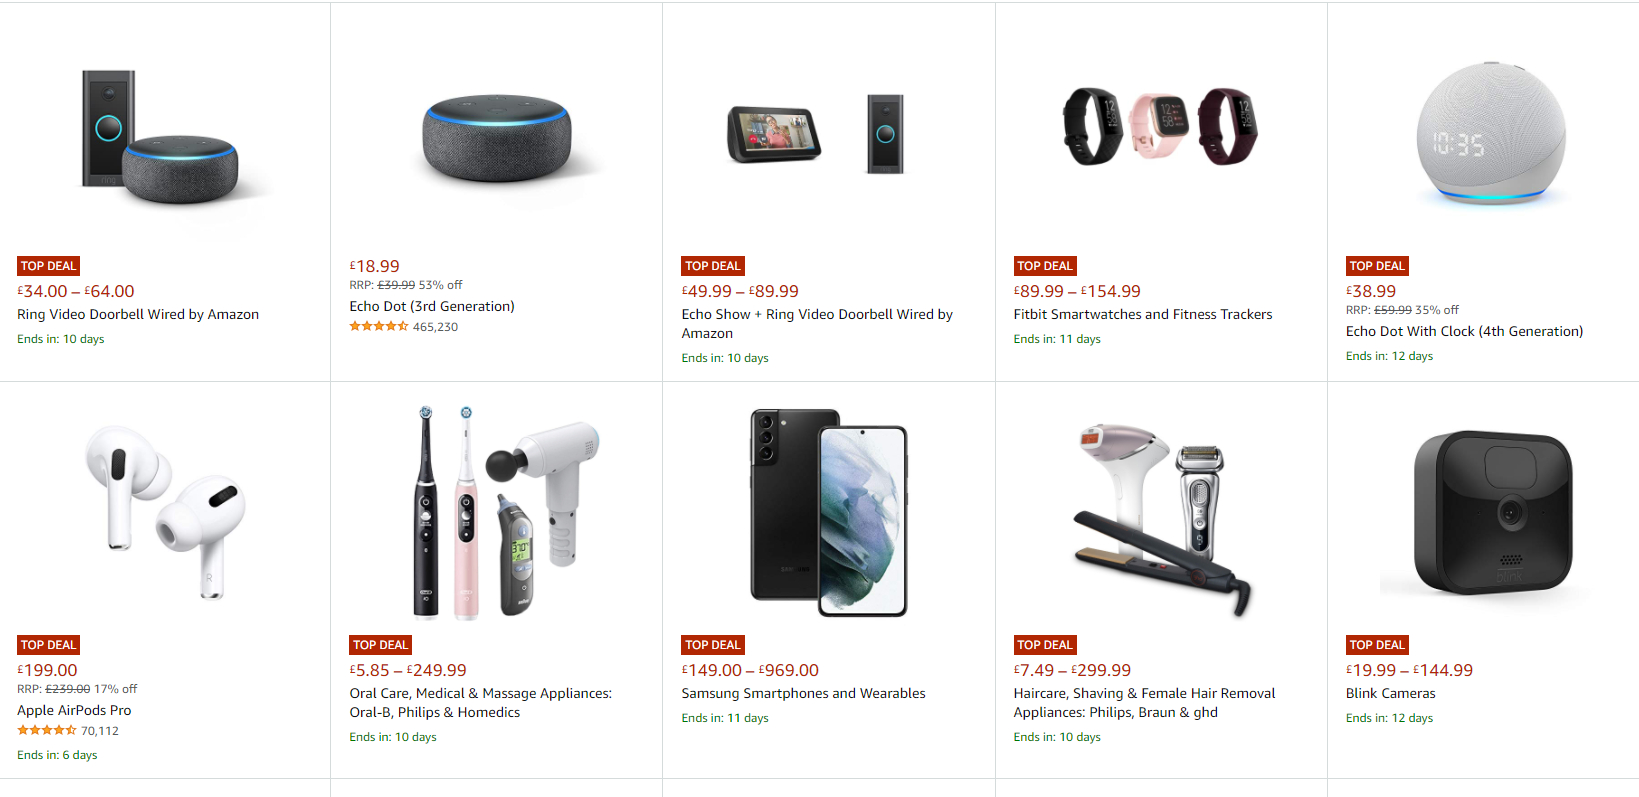 Image of Amazon deals